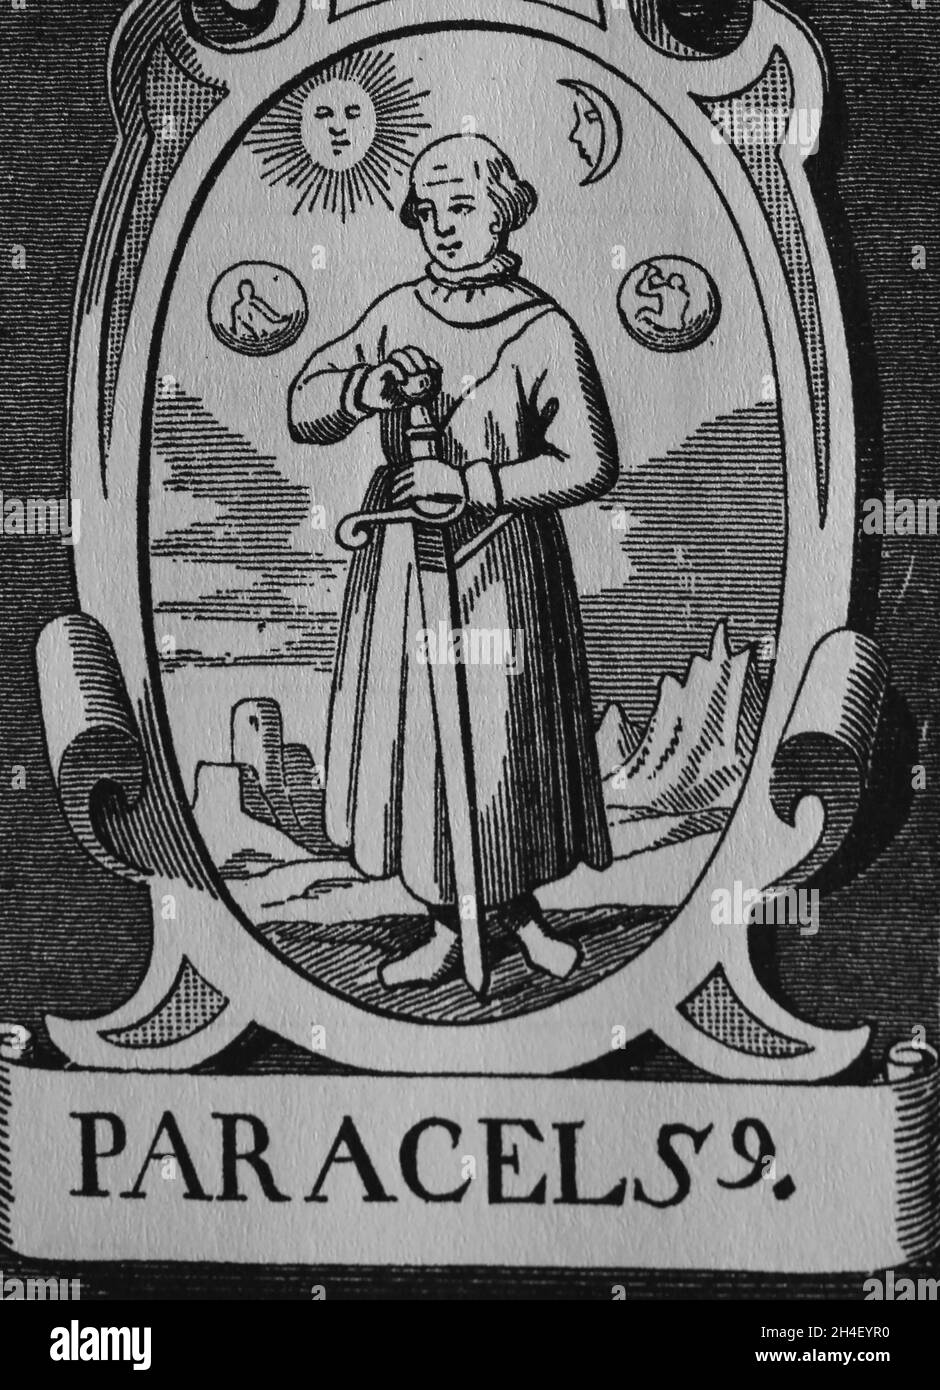 Paracelsus (1493-1541). Theophrastus von Hohenheim. Swiss physician,alchemist and philospher of the German Renaissance. Stock Photo